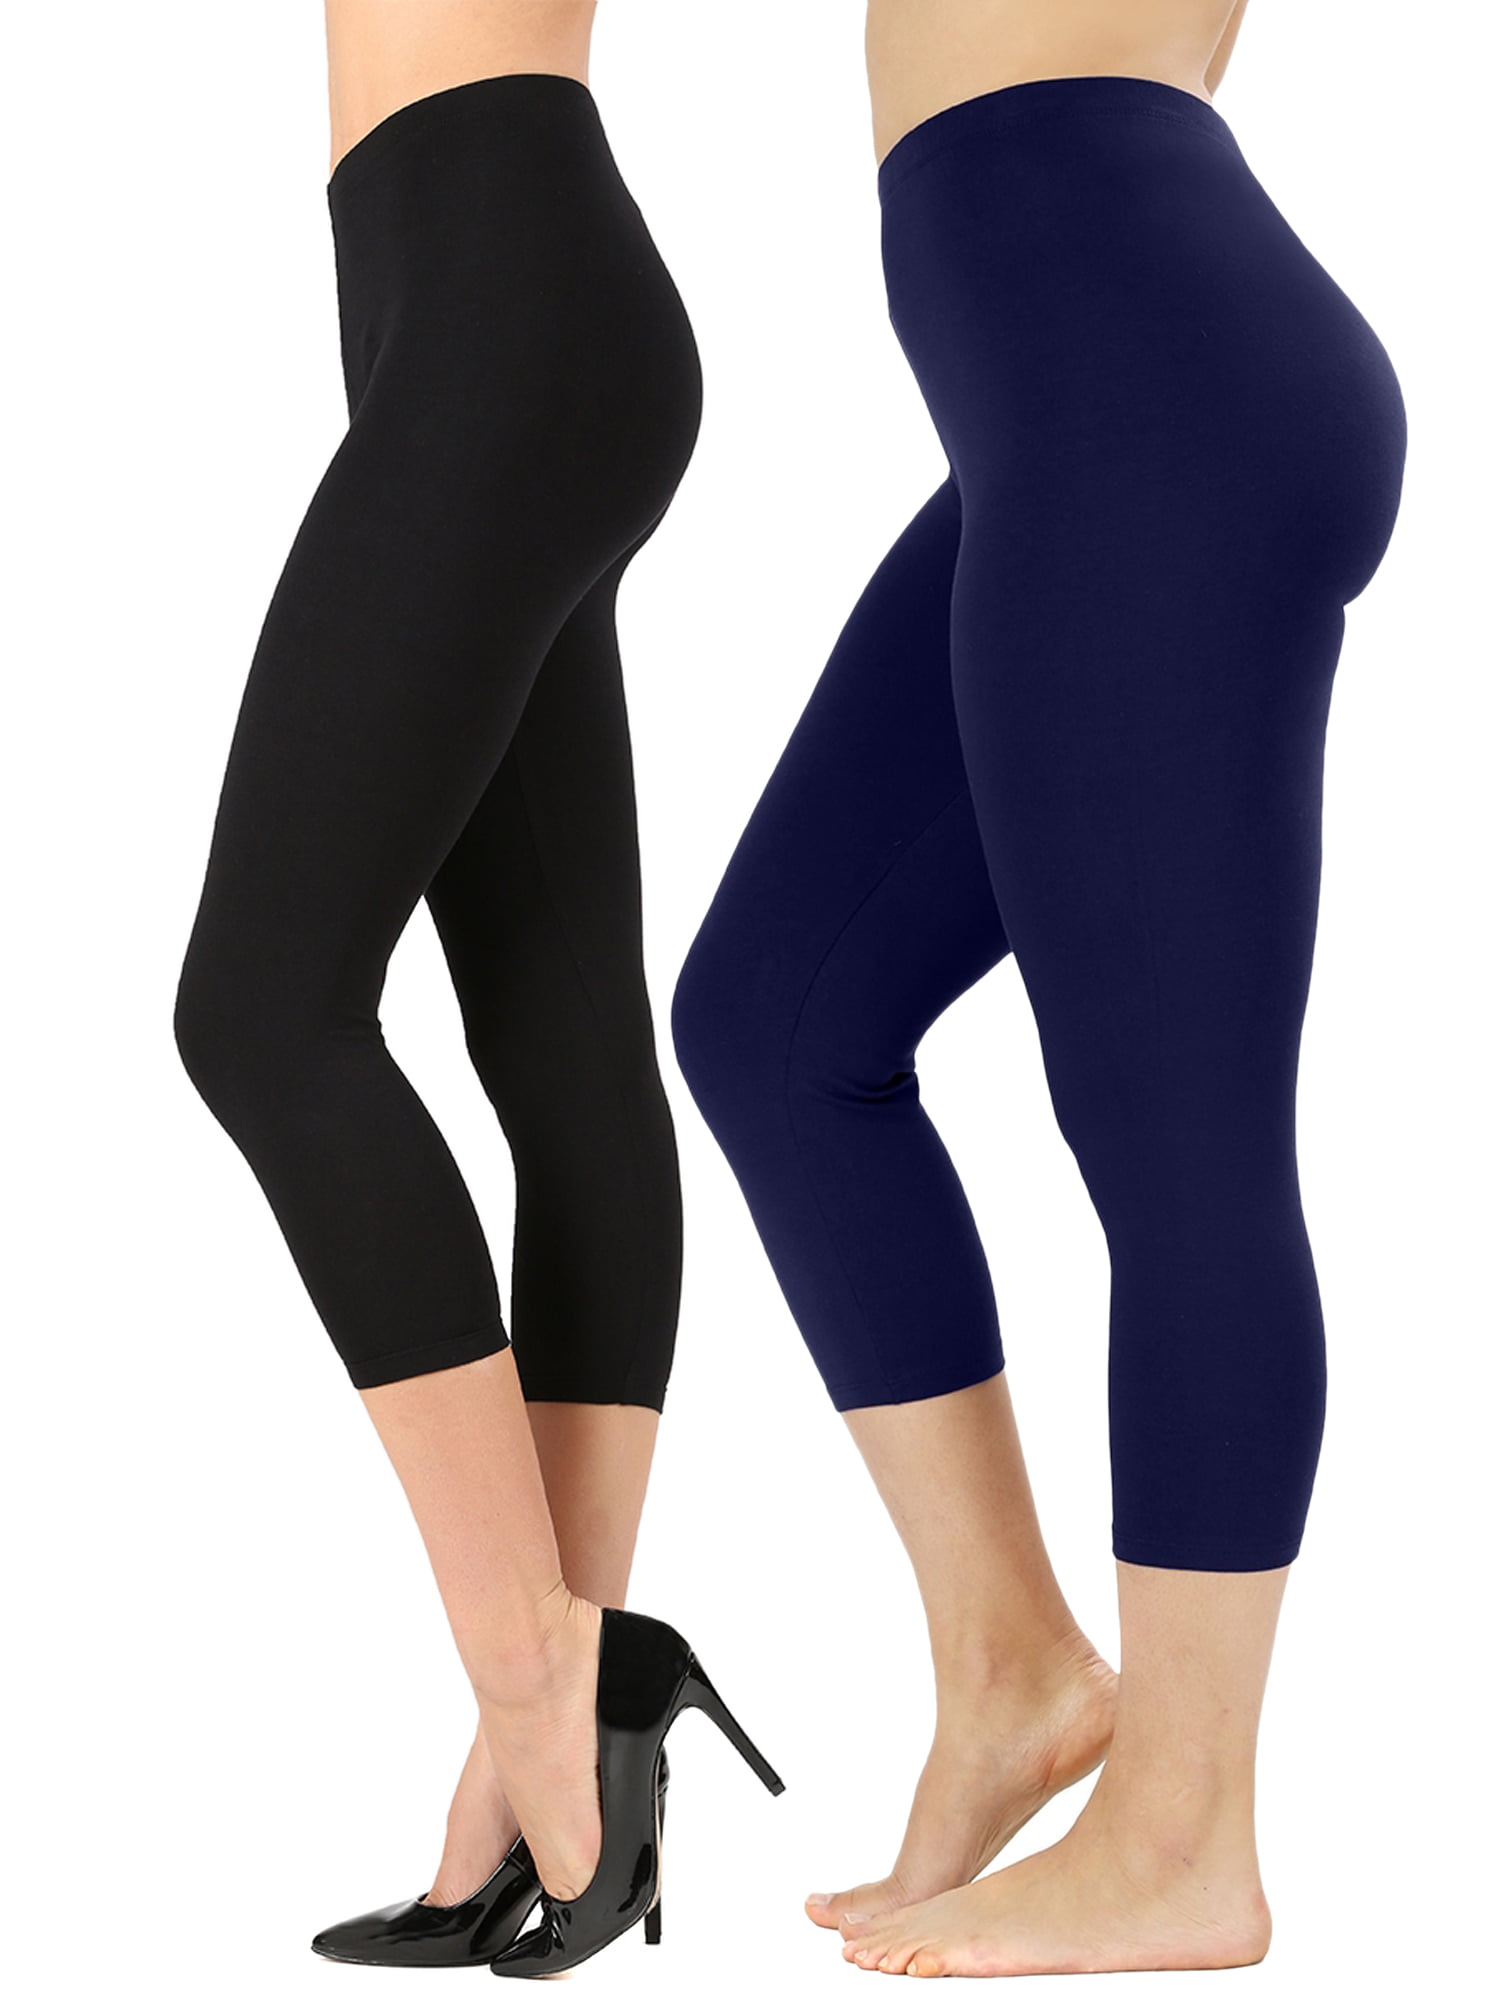 Nirlon Women's Capri Yoga Pants 7/8 Length Sides Pockets High